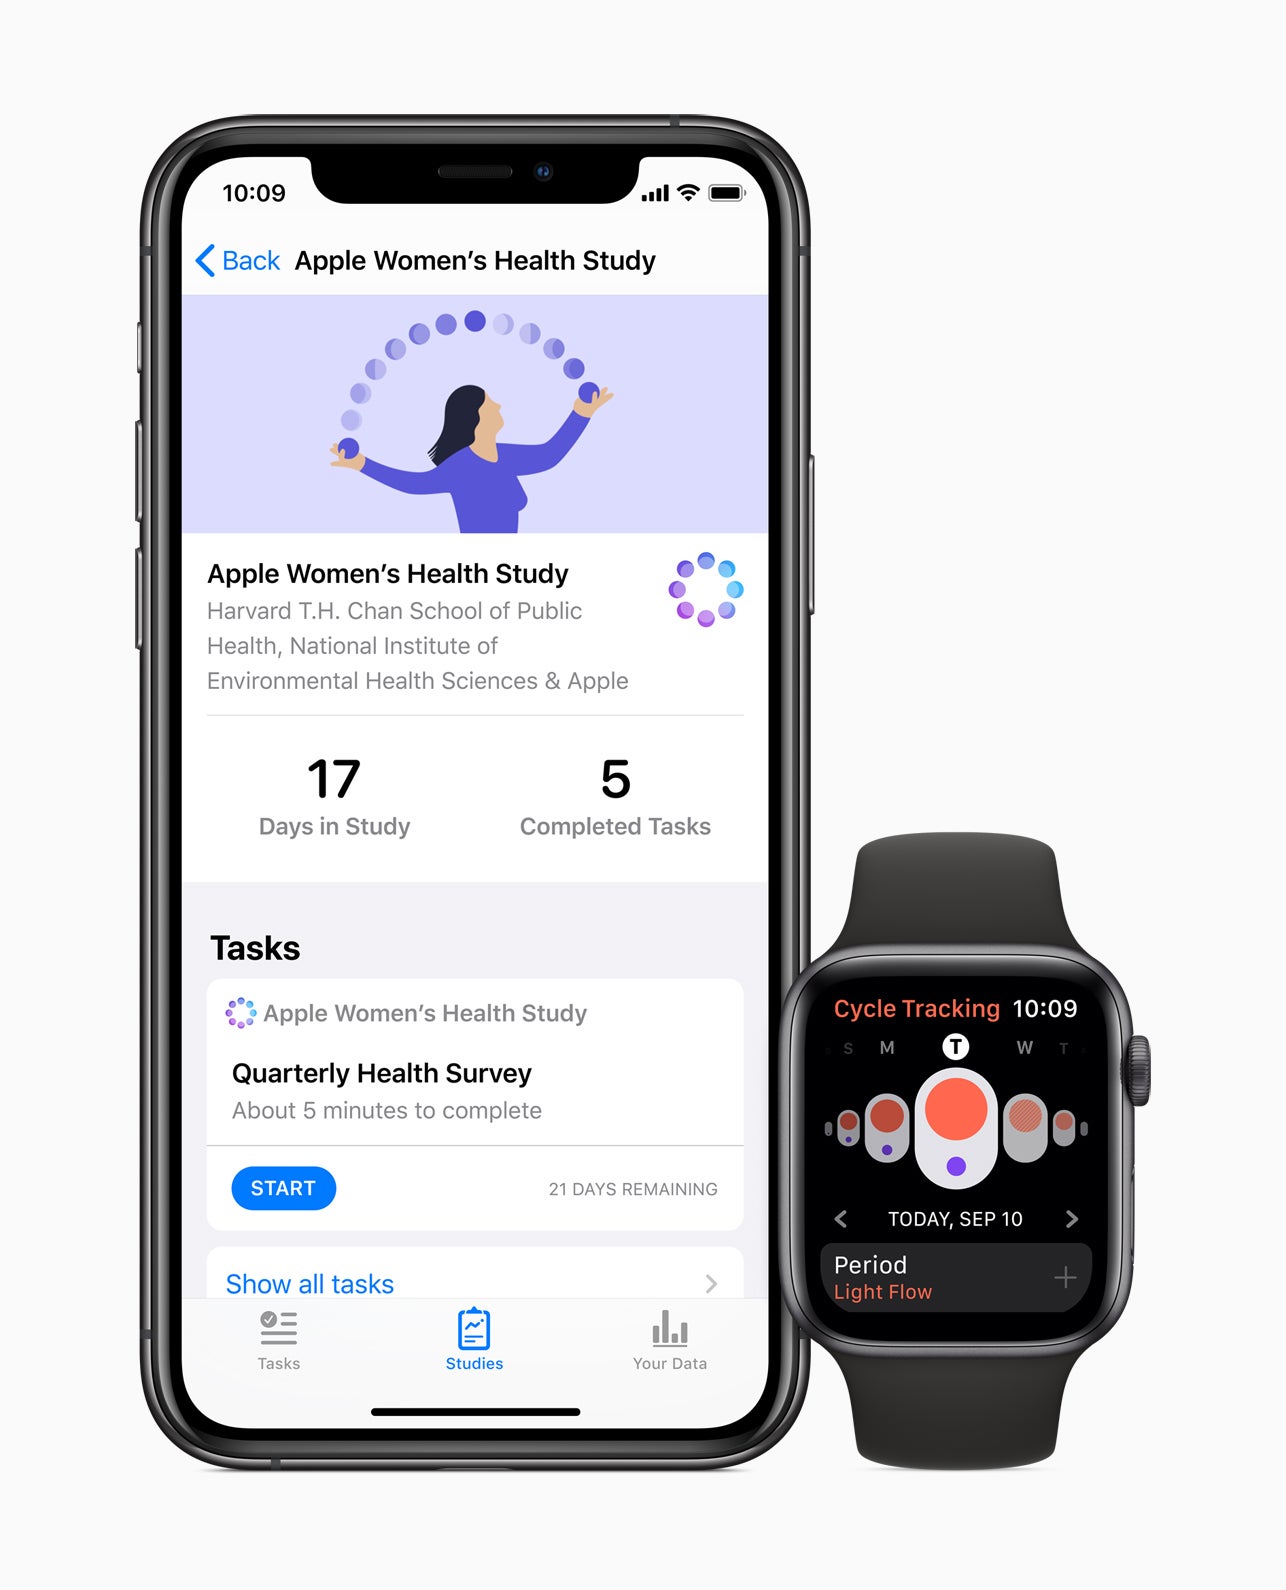 Apple Watch health survey screenshot